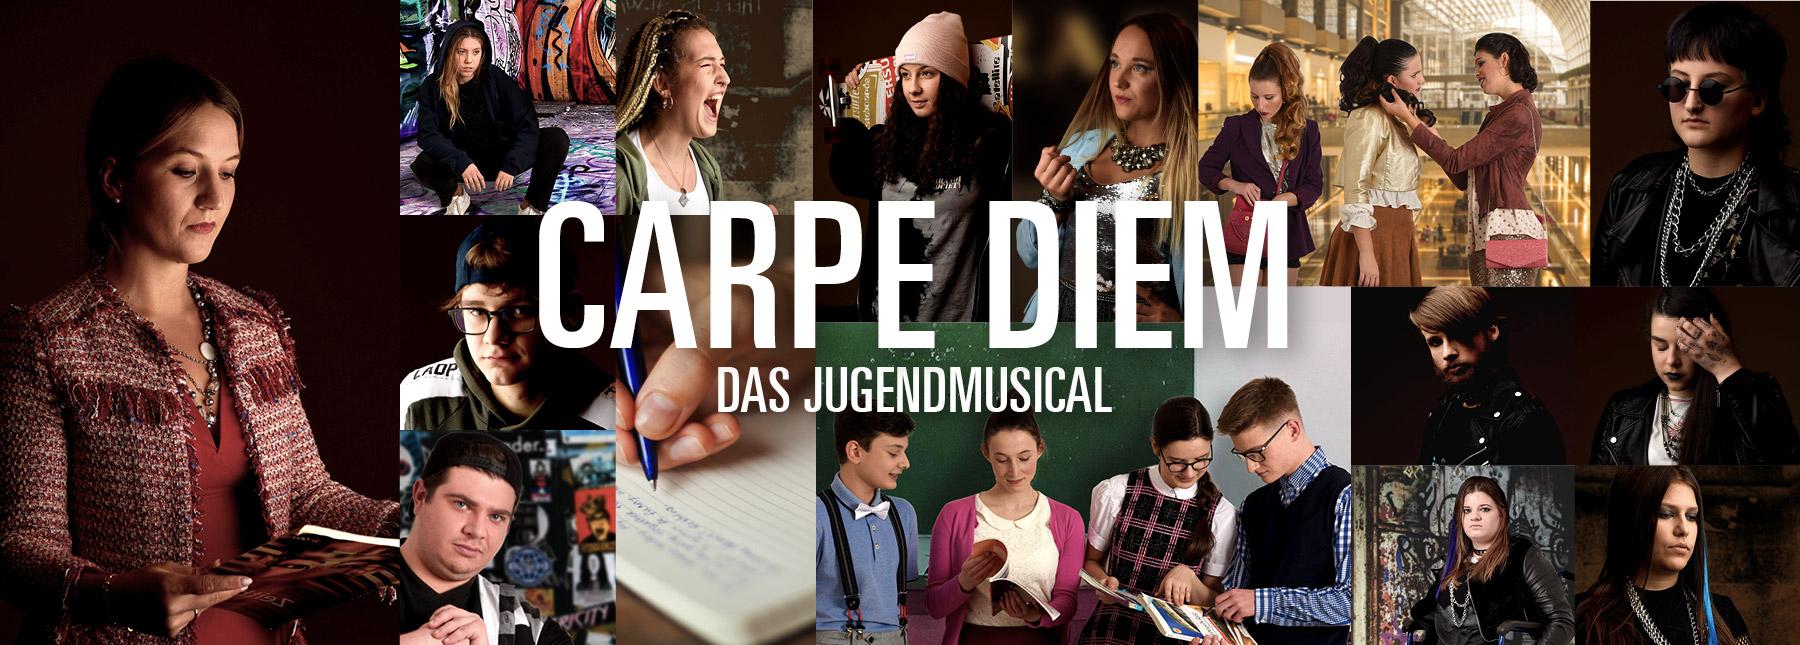 Carpe Diem - das Jugendmusical